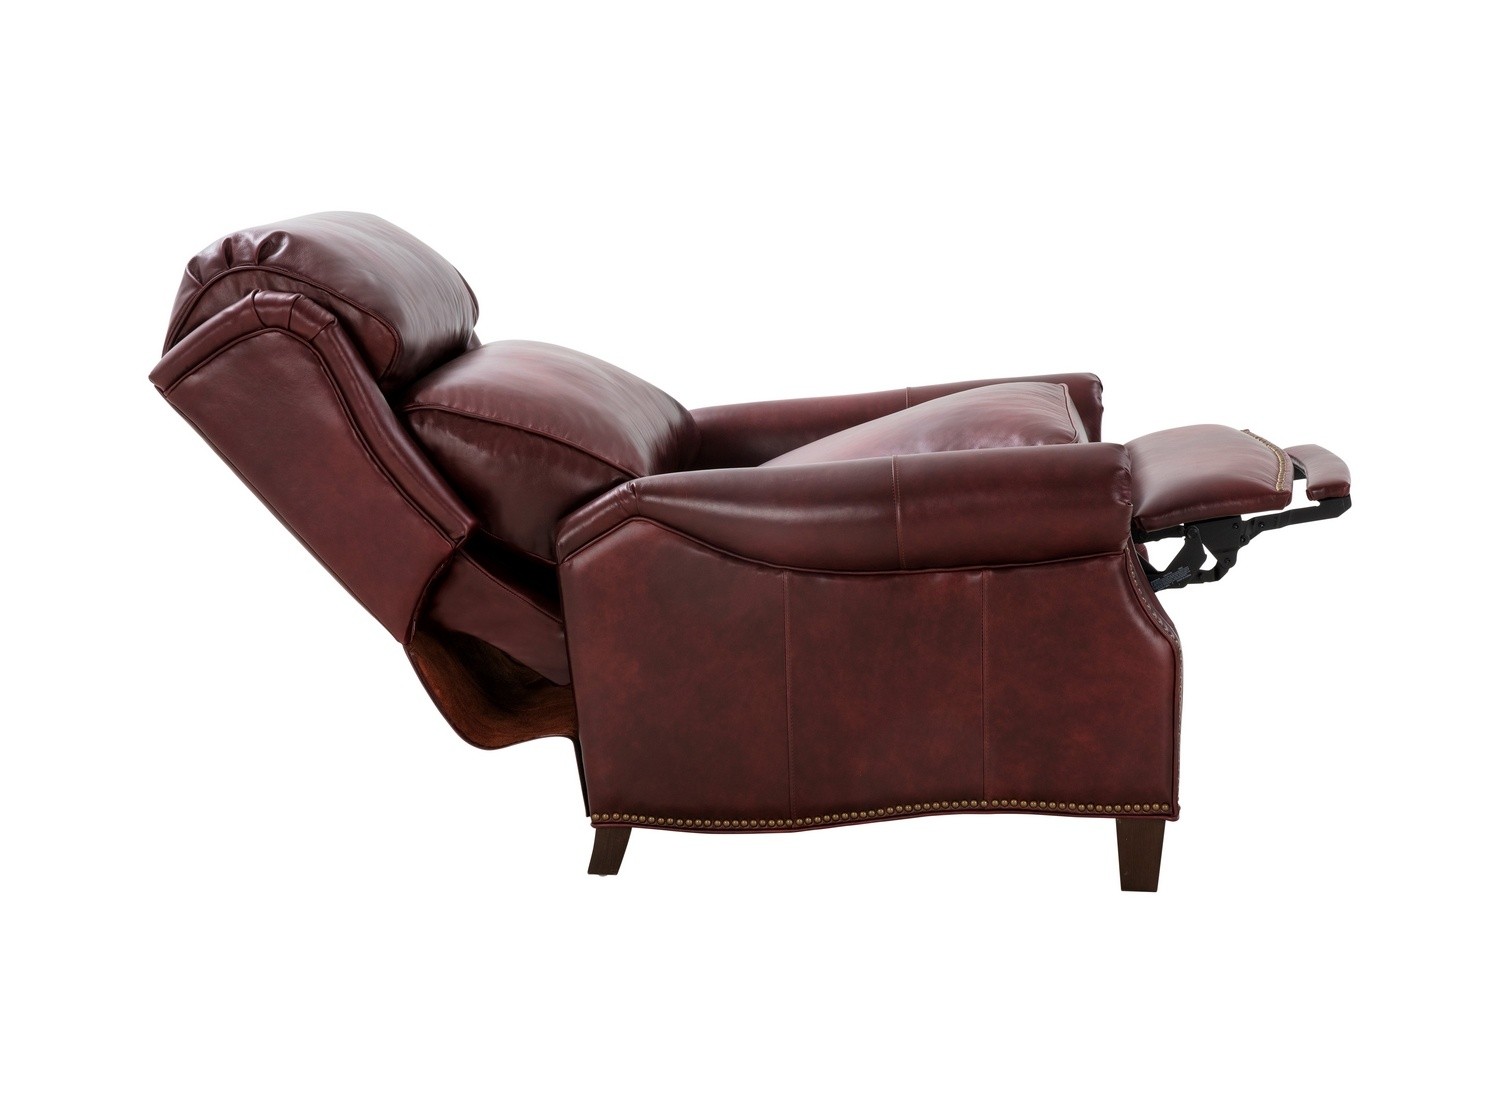 Barcalounger Meade Recliner Chair - Emerson Sangria/Top Grain Leather